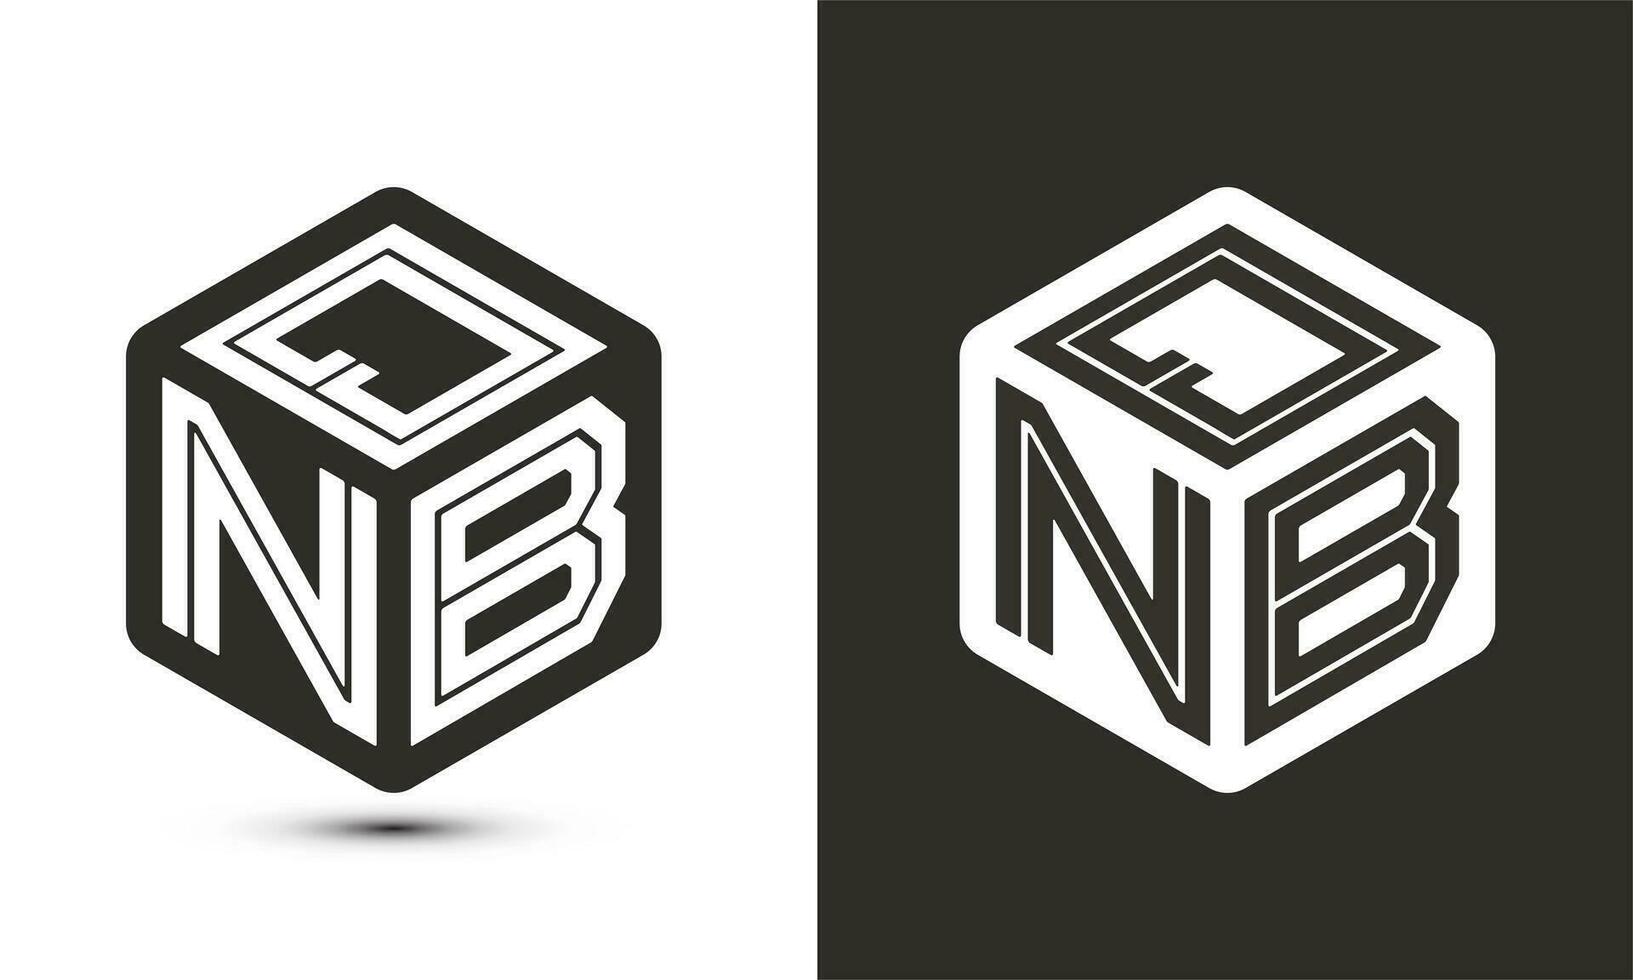 qnb letra logo diseño con ilustrador cubo logo, vector logo moderno alfabeto fuente superposición estilo.